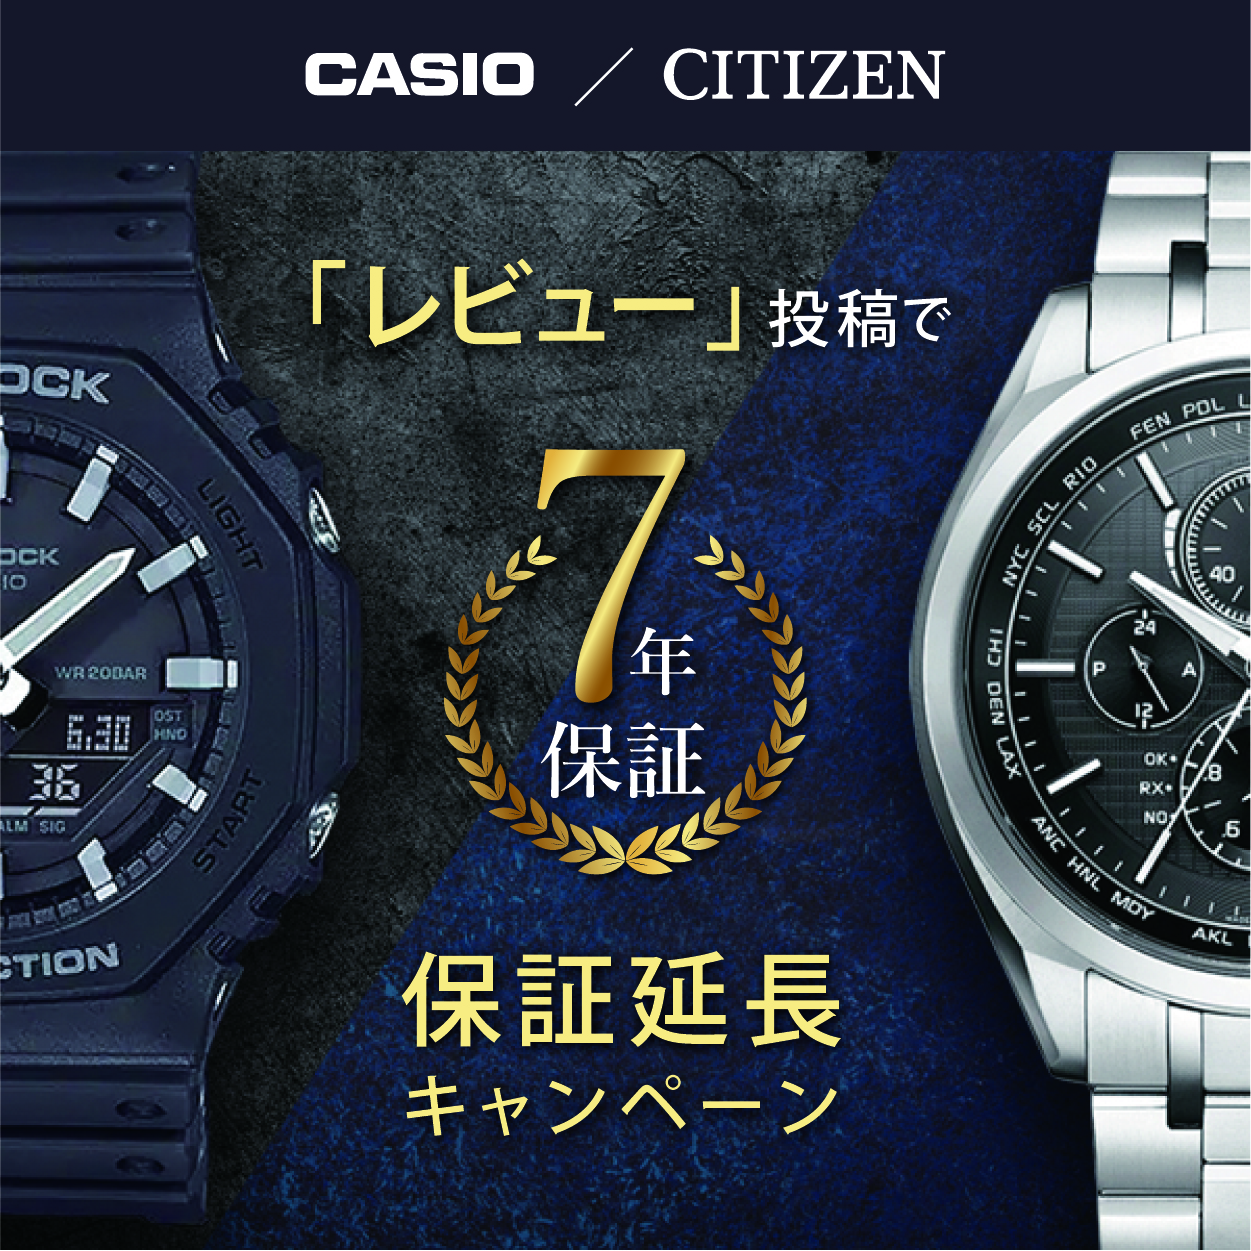 Casio Citizen 7 year warranty campaign